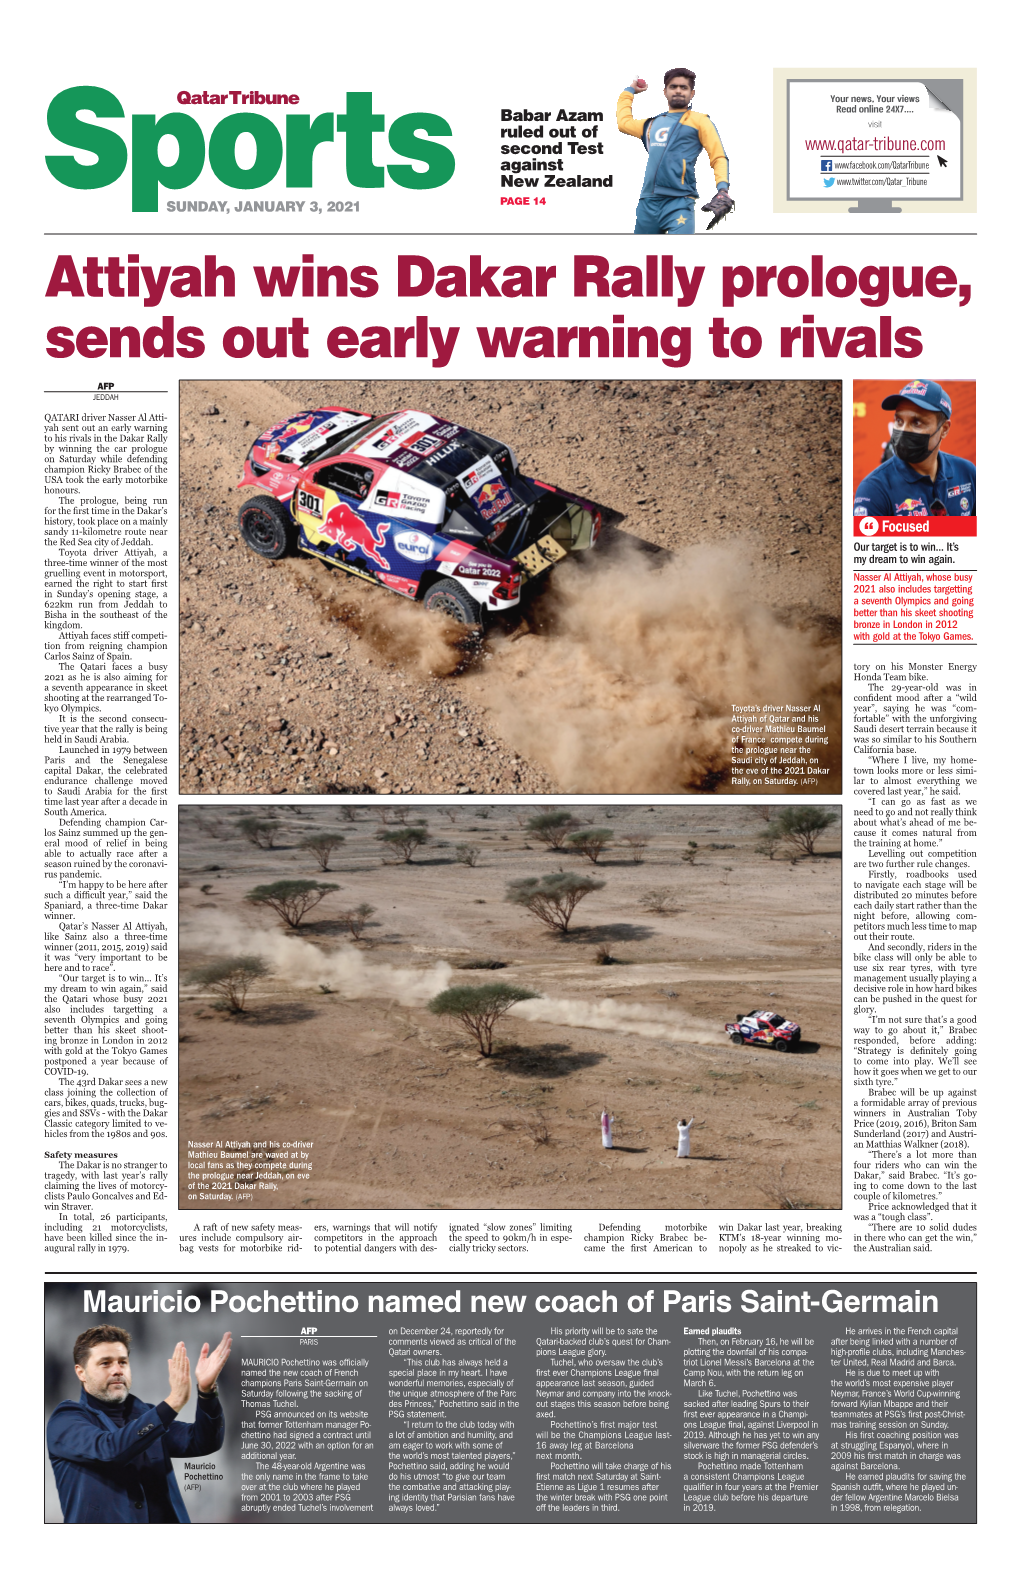 Attiyah Wins Dakar Rally Prologue, Sends out Early Warning to Rivals